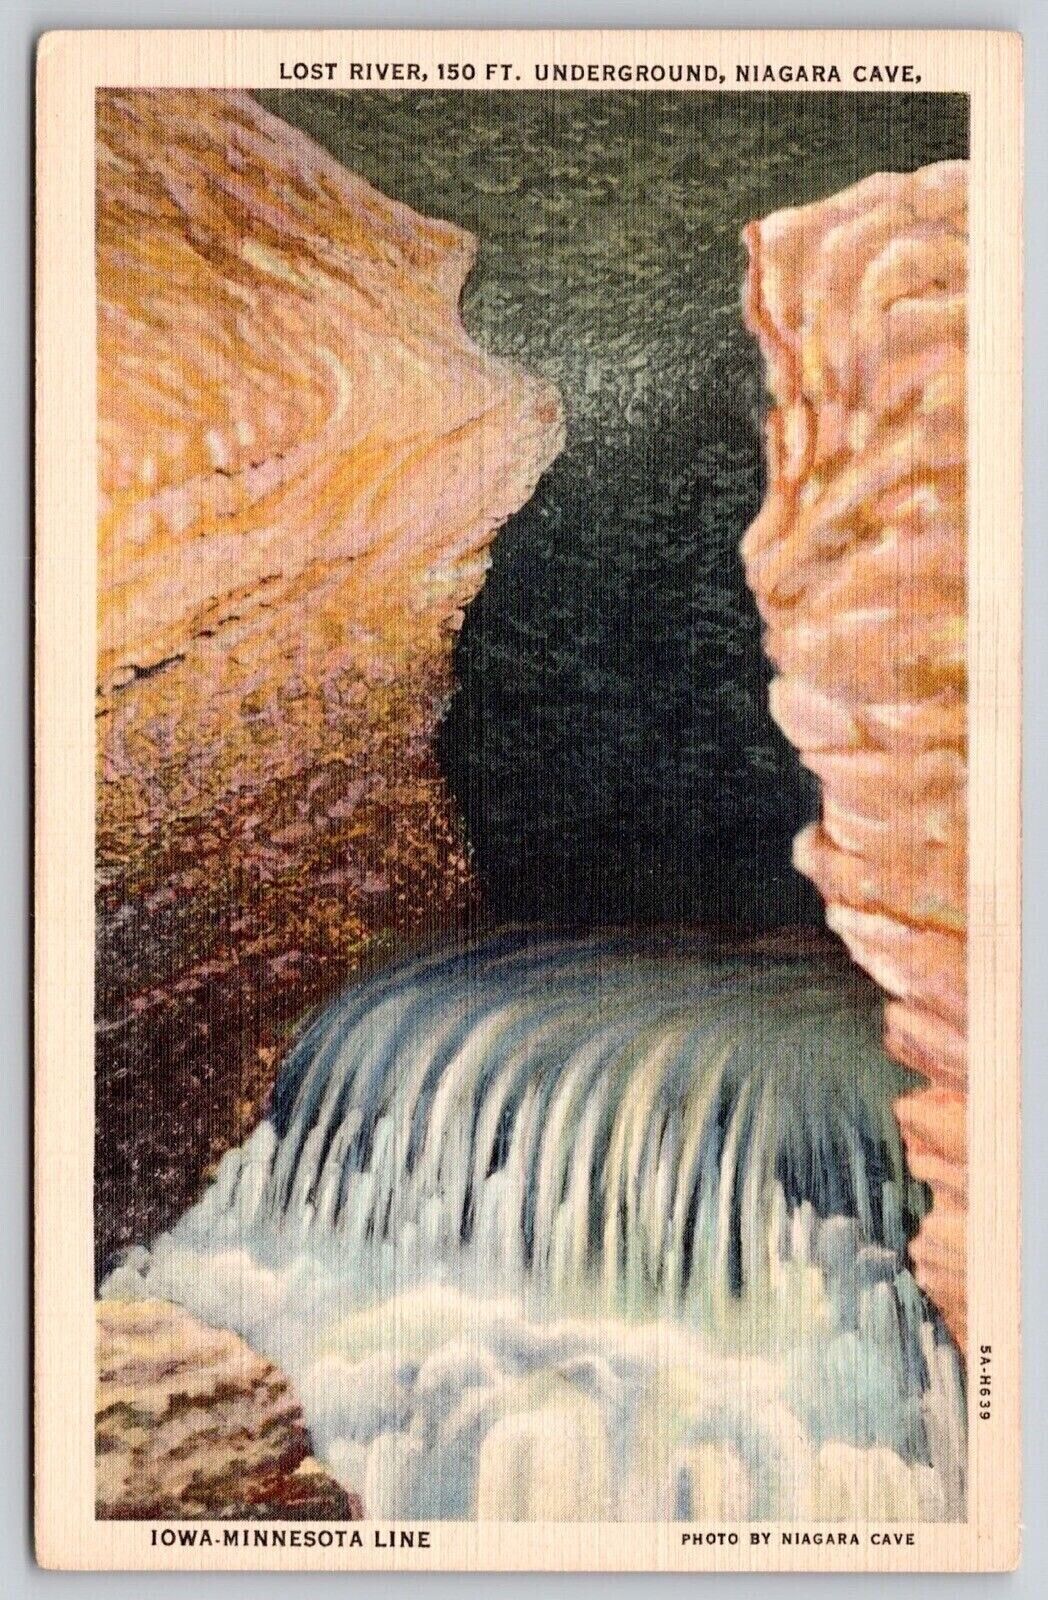 Lost River Underground Niagara Cave Iowa Minnesota Line Waterfall Linen Postcard